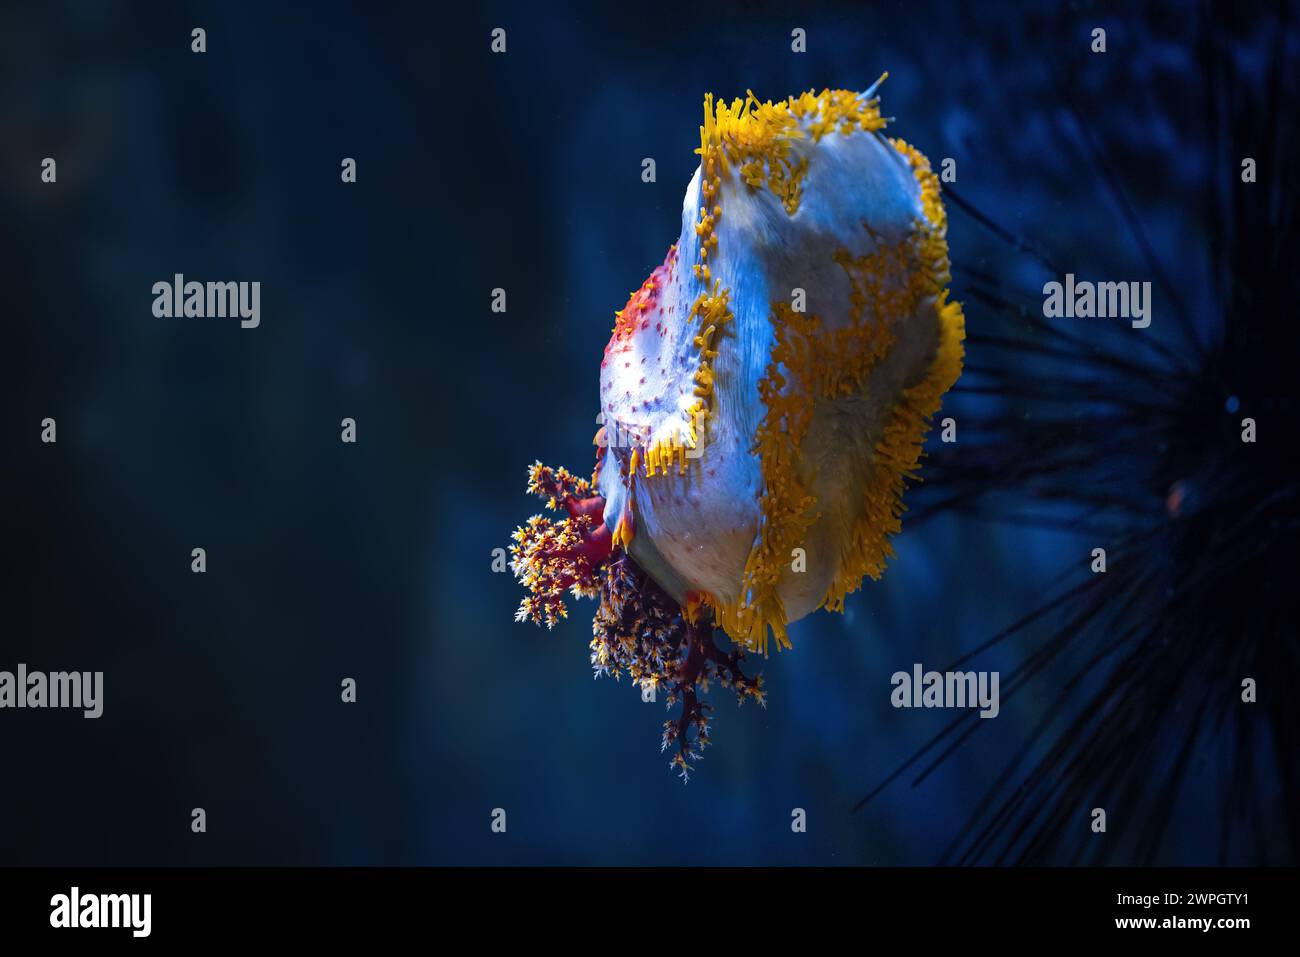 Australian Sea Apple (Pseudocolochirus axiologus) with tentacles Stock Photo